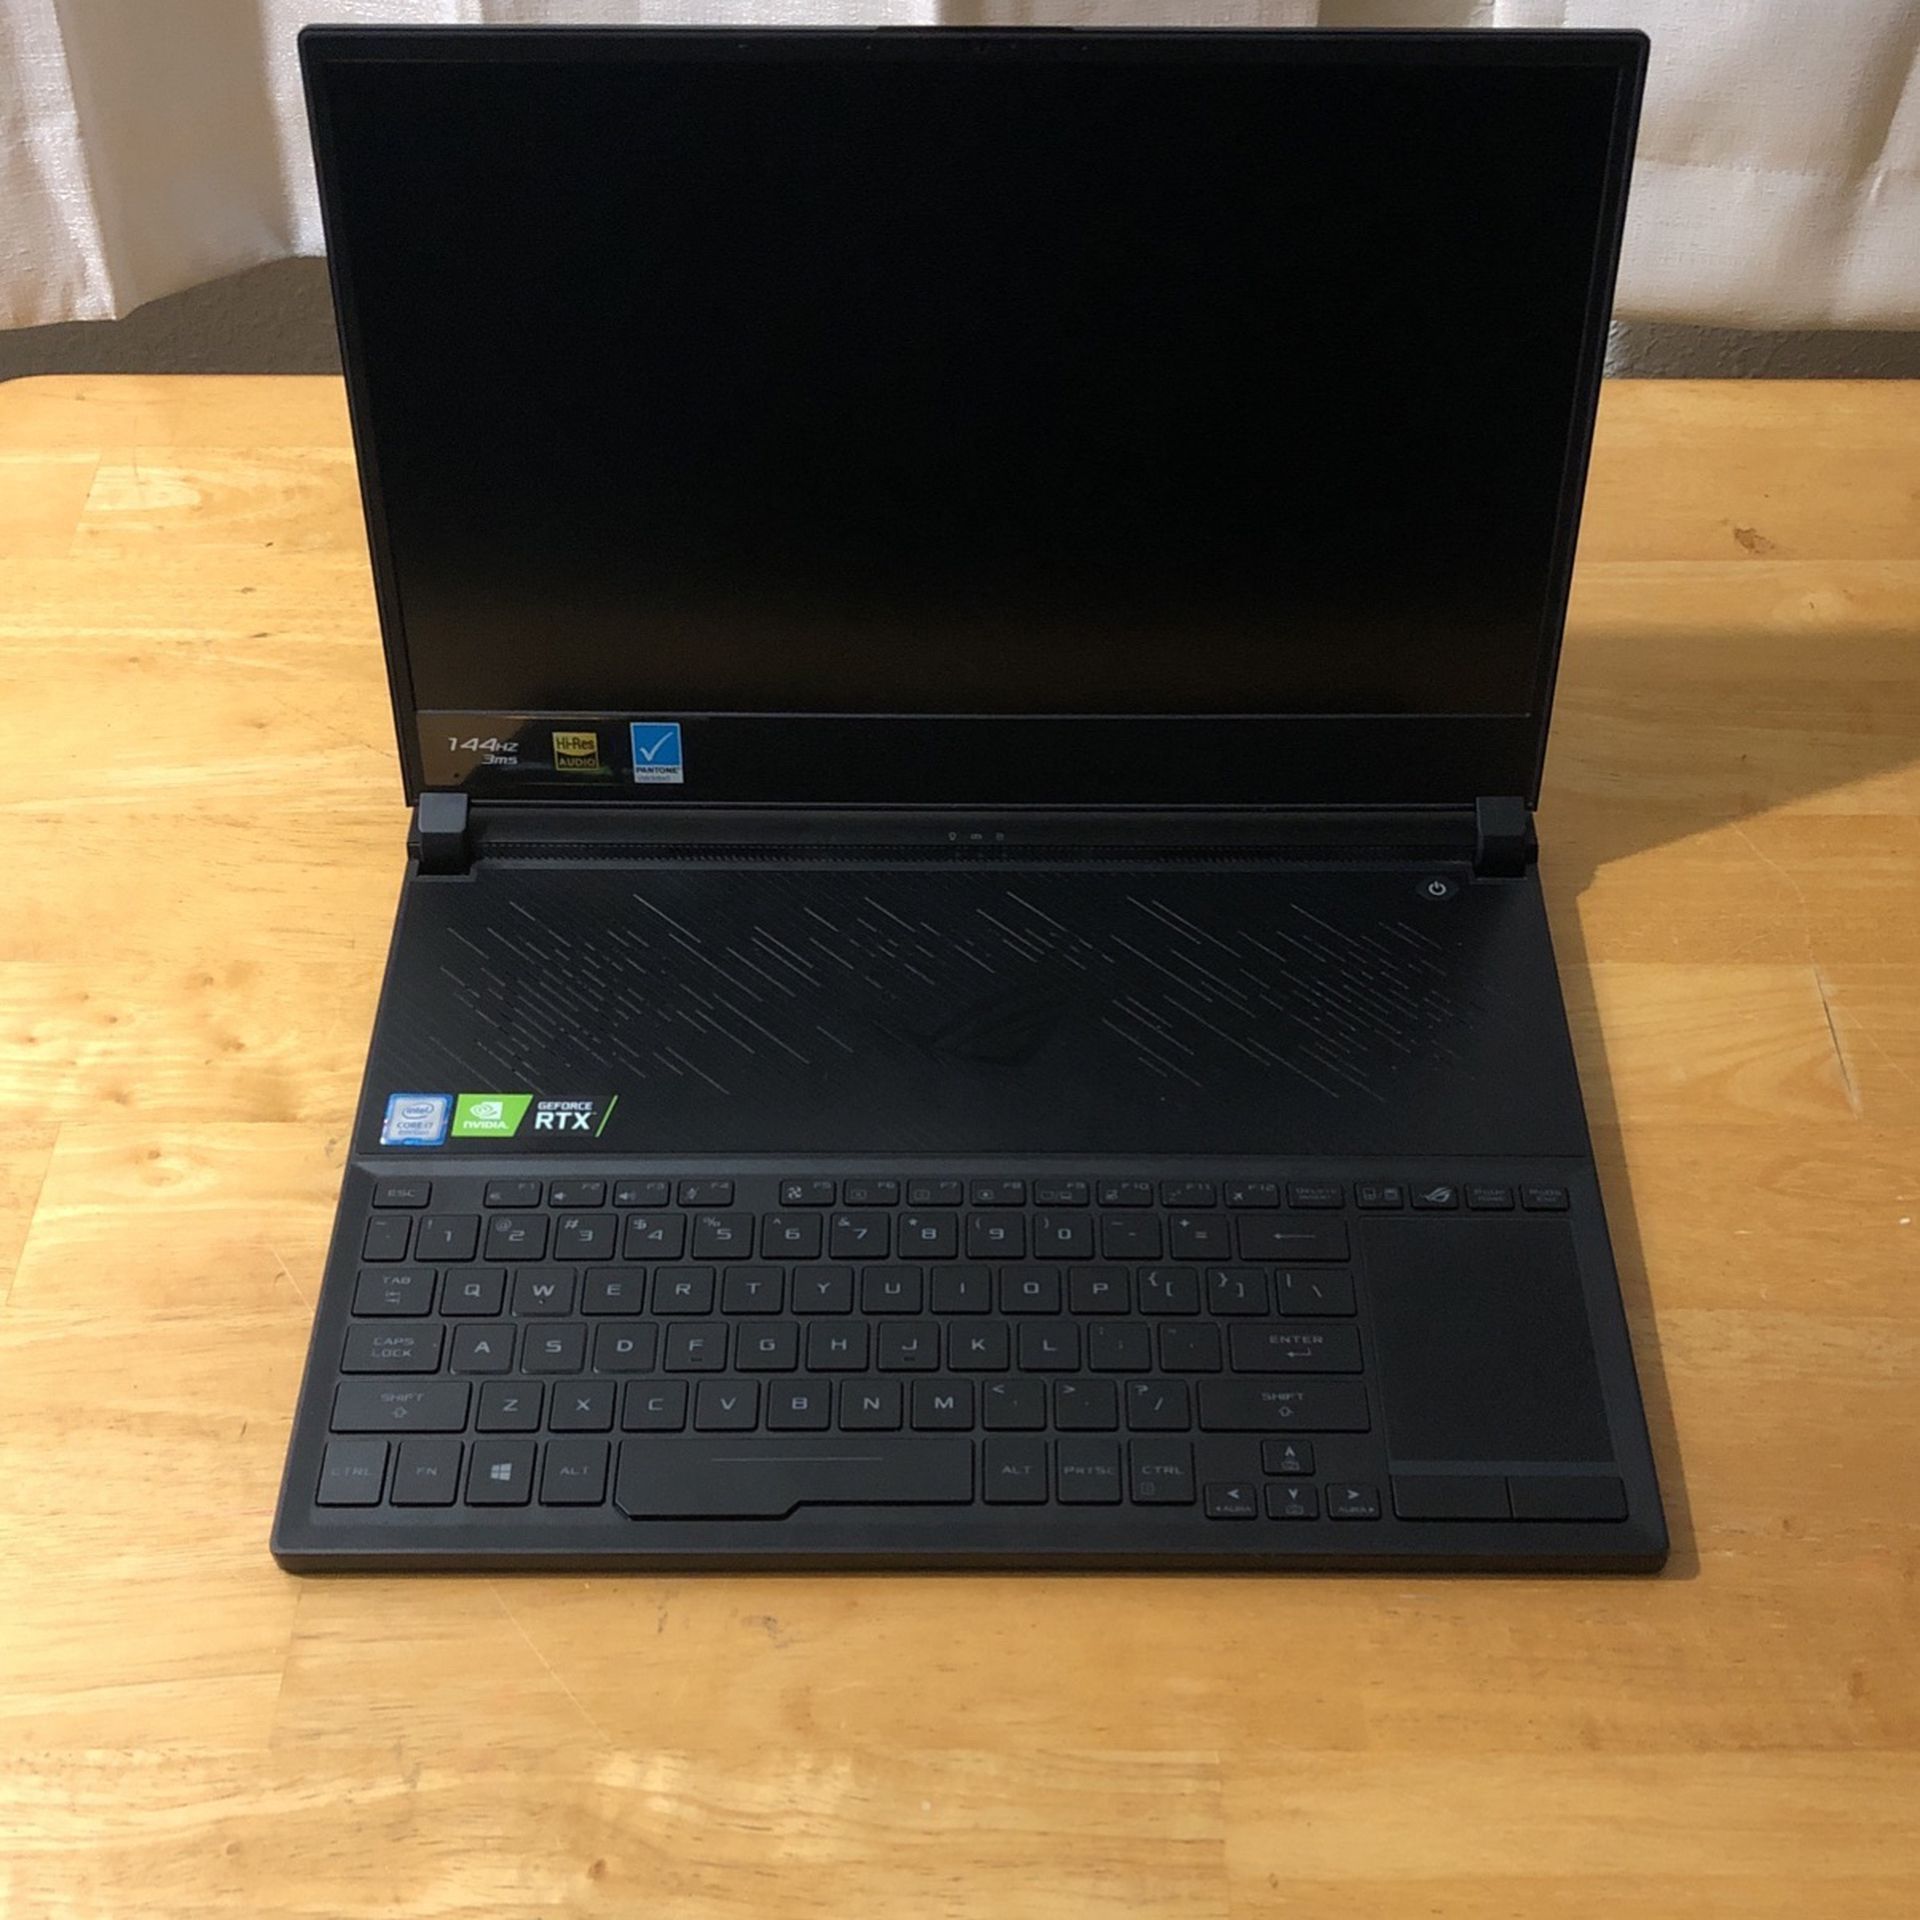 ASUS ROG ZEPHYRUS S 15.6” Gaming Laptop GeForce RTX 2080, Intel Core i7-8750H, 16 GB DDR4, 2 TB NVMe, Windows 10 Pro (2020)